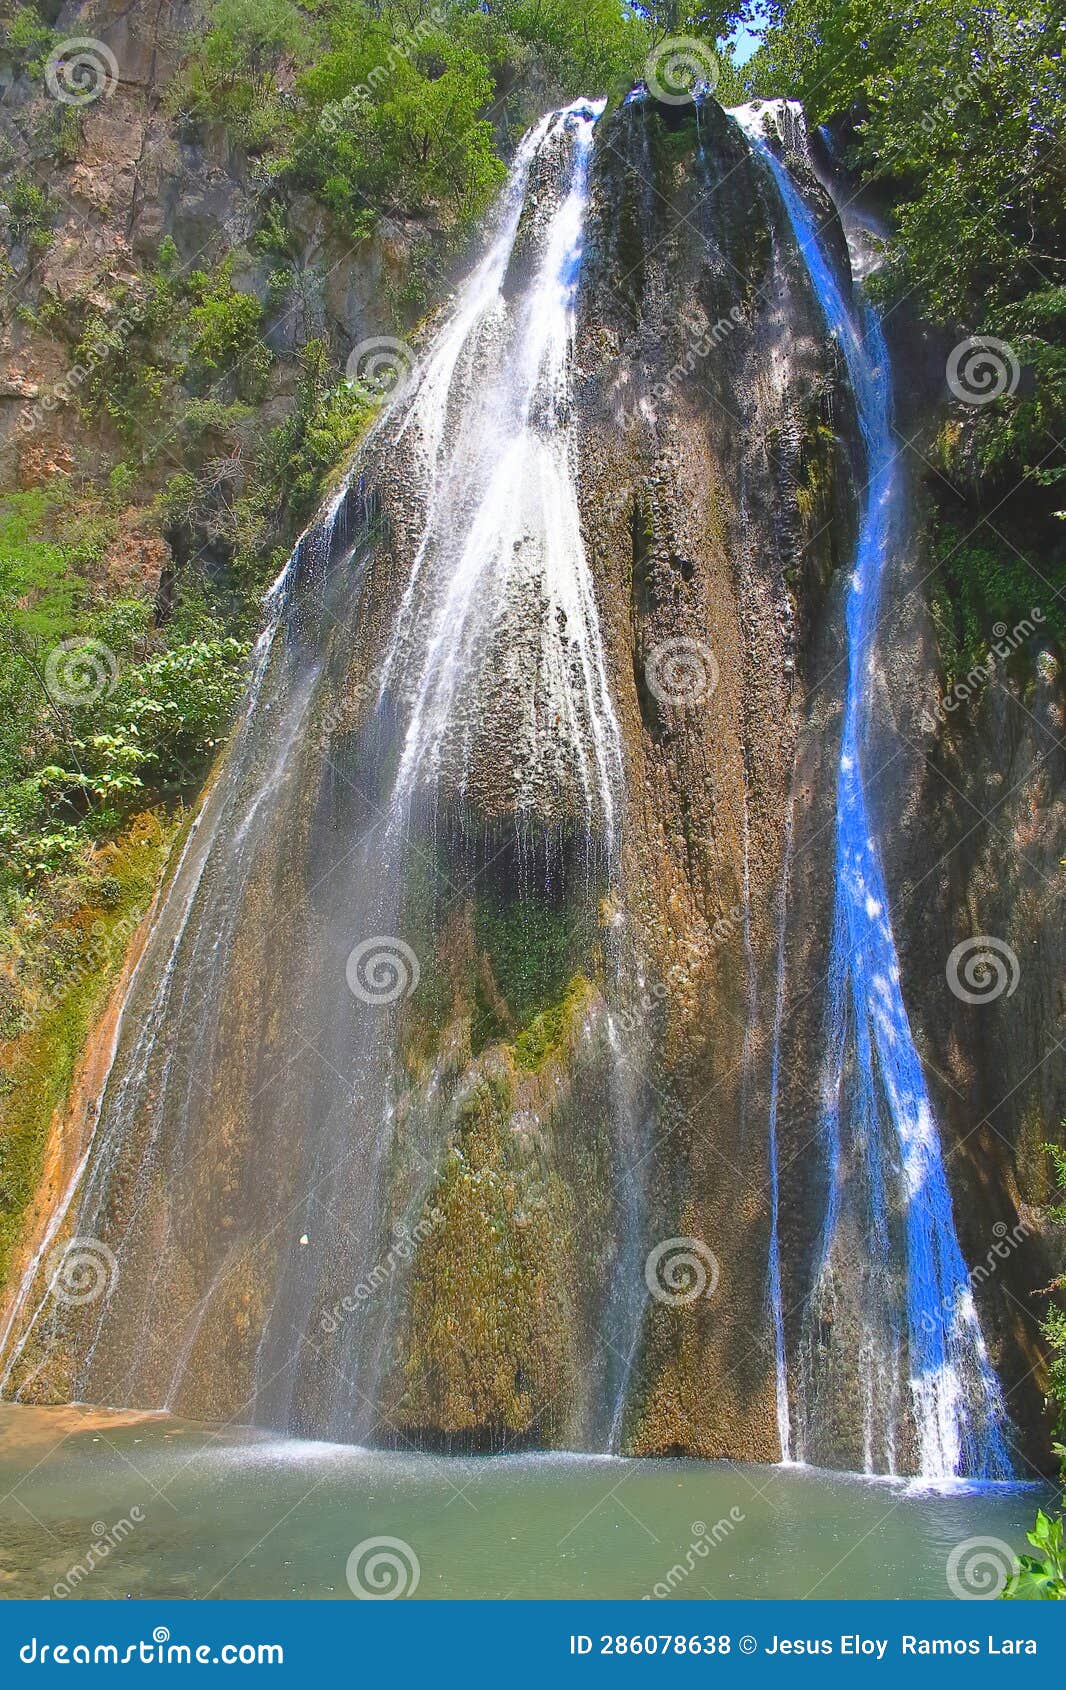 waterfall cola de caballo in monterrey nuevo leon, mexico v